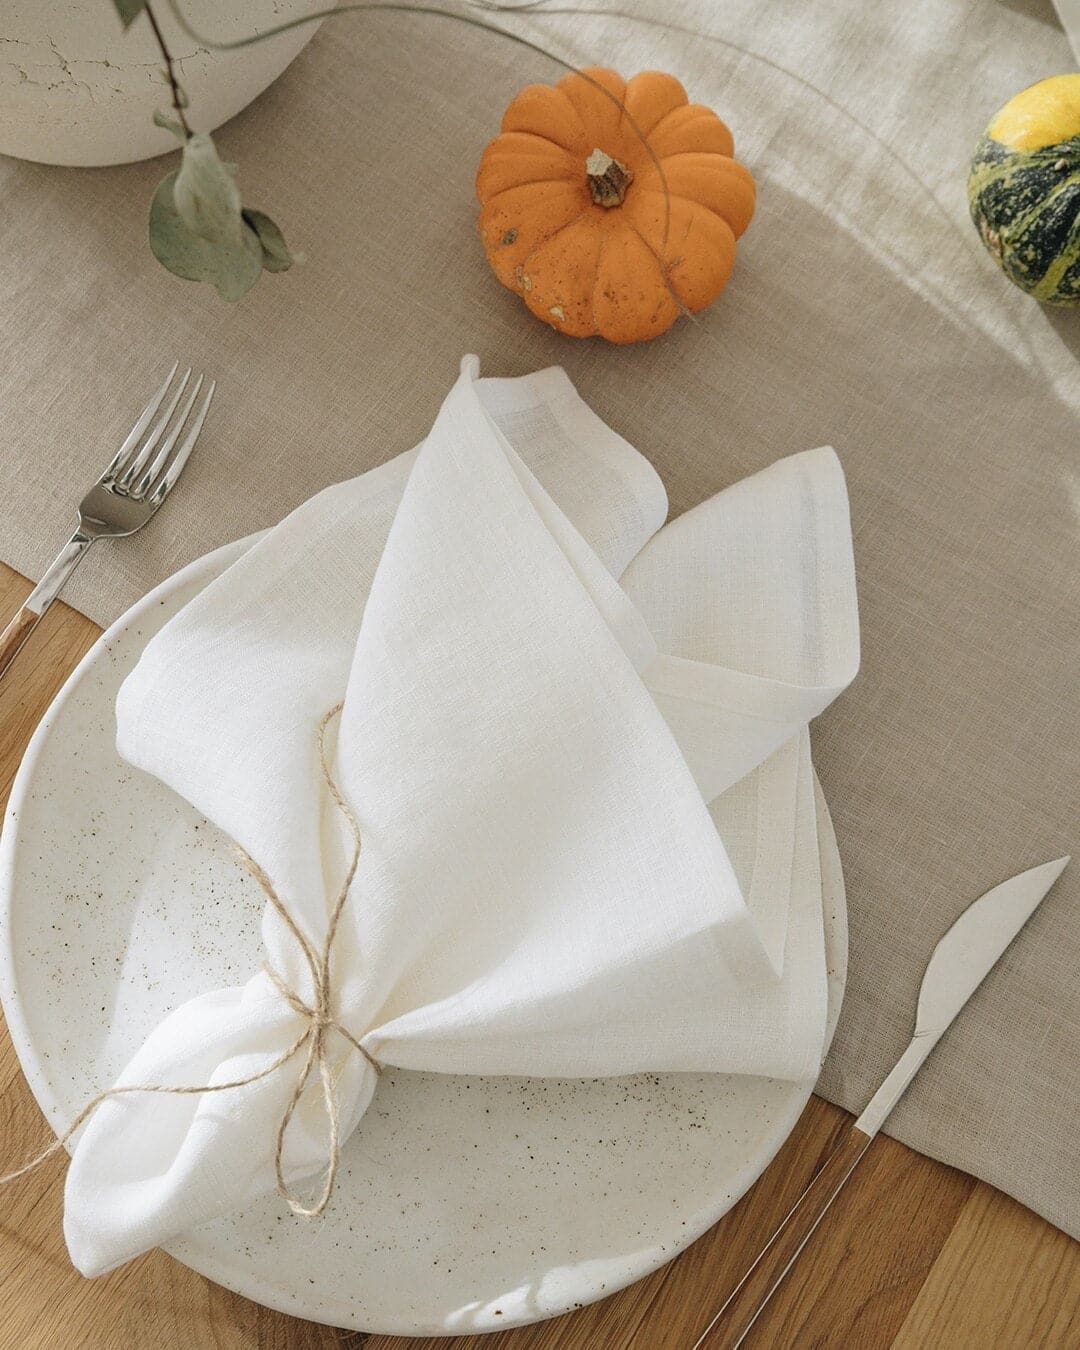 MagicLinen 100% Linen Napkins - Reusable Kitchen Cloth Napkins for Everyday  Use - Eco friendy Dinner Table Napkins Set - Set of 4 - Natural Color